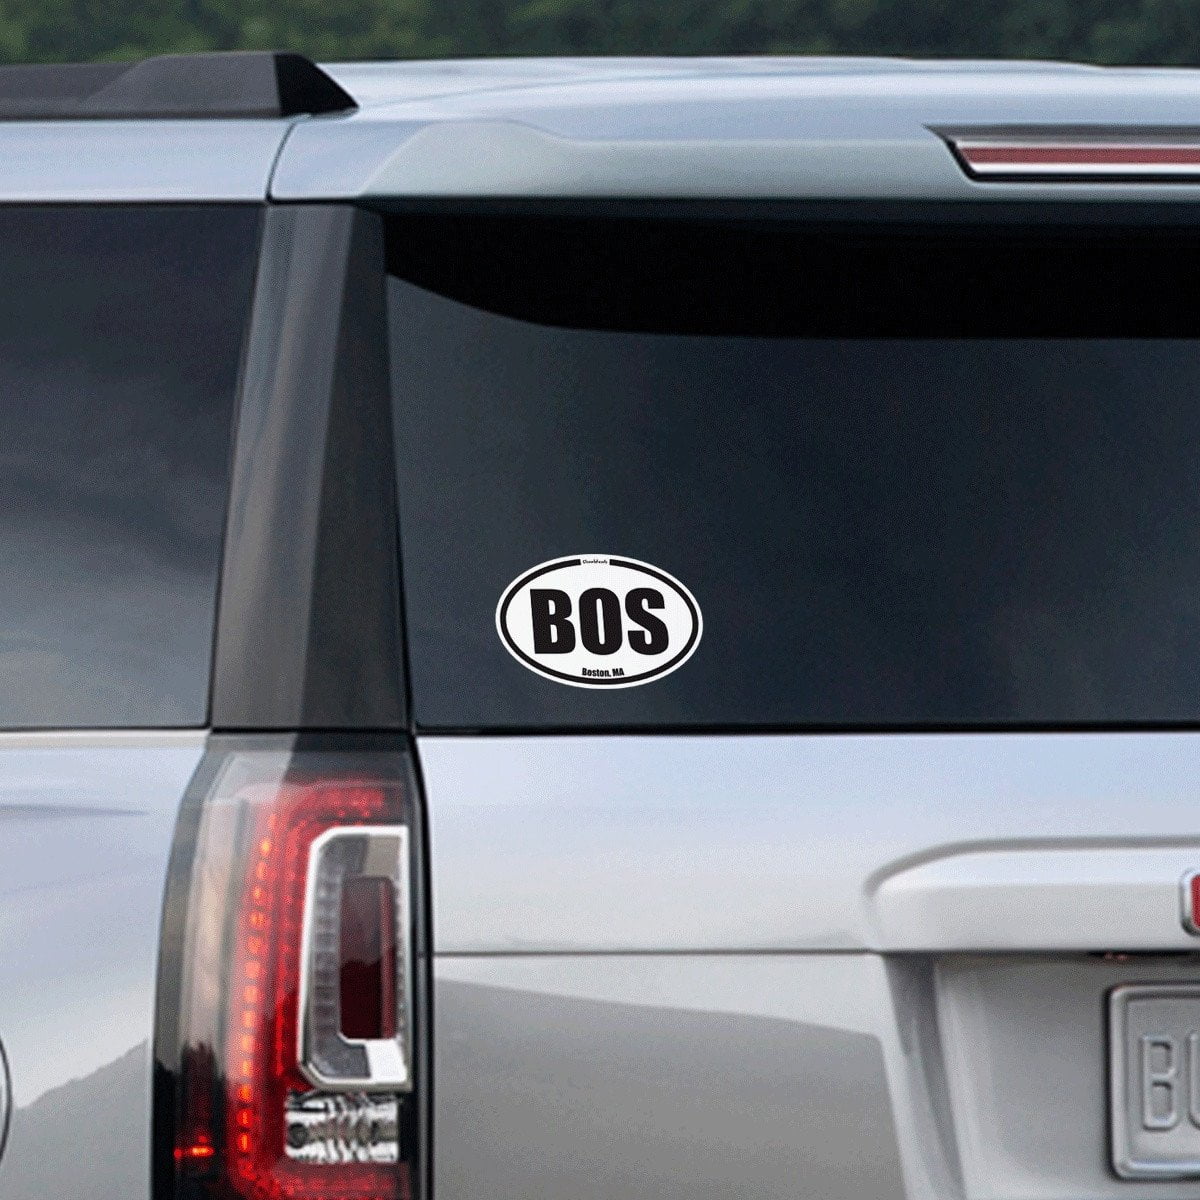 ''BOS'' Sticker White/Black Classic Boston - Chowdaheadz